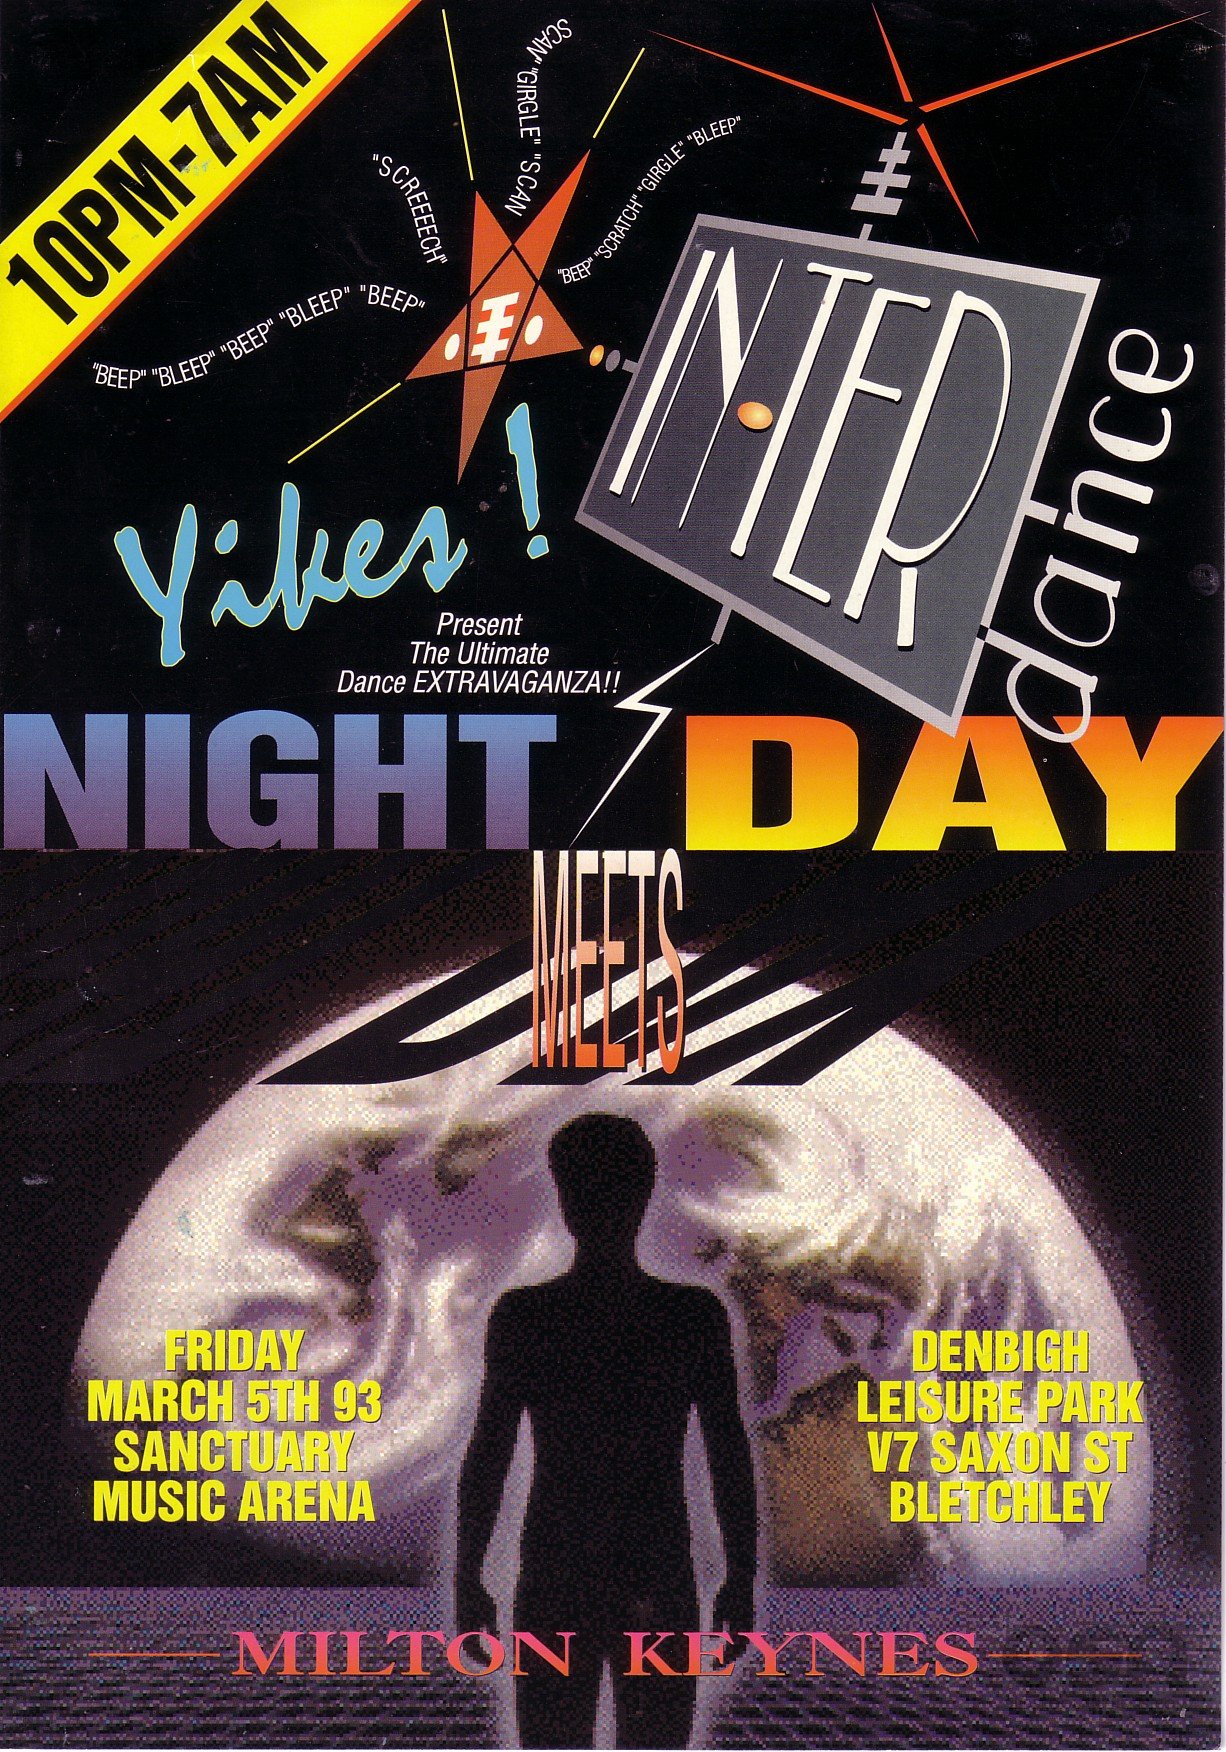 1_Night_meets_Day_-_Fri_5th_March_93_-_Sanctuary_Music_Arena_Milton_Keynes.jpg